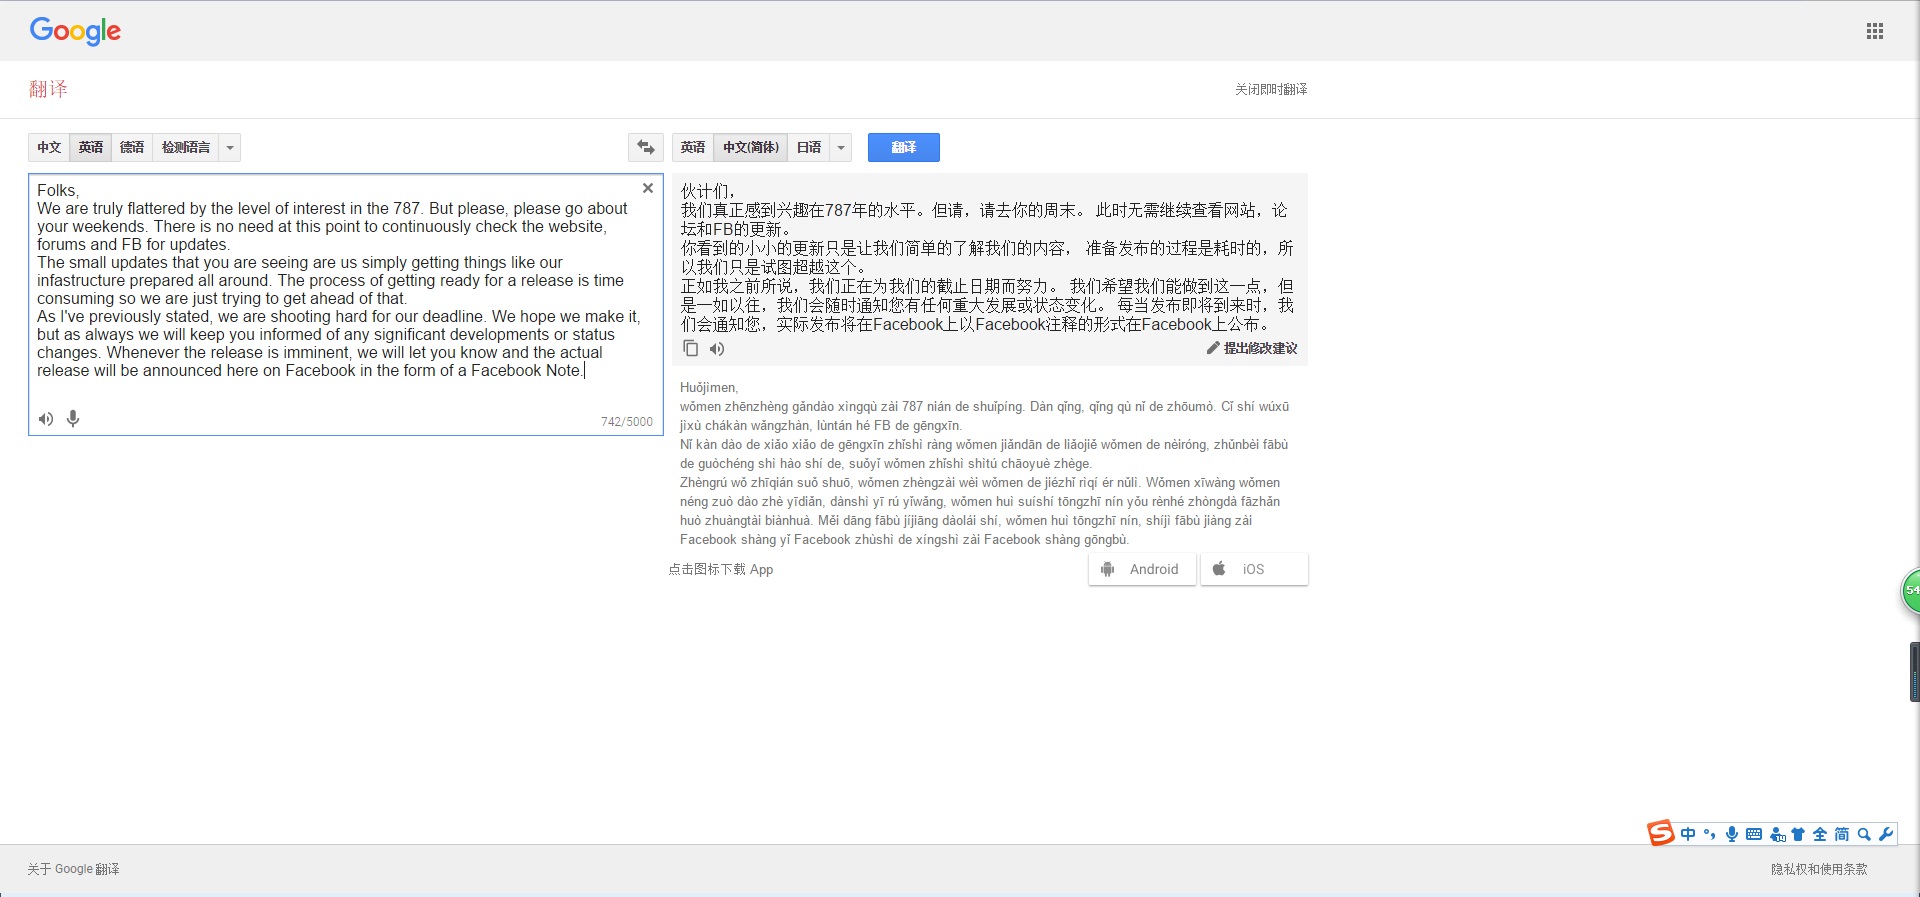 Google翻译也不给力，更别说百度翻译了。。。